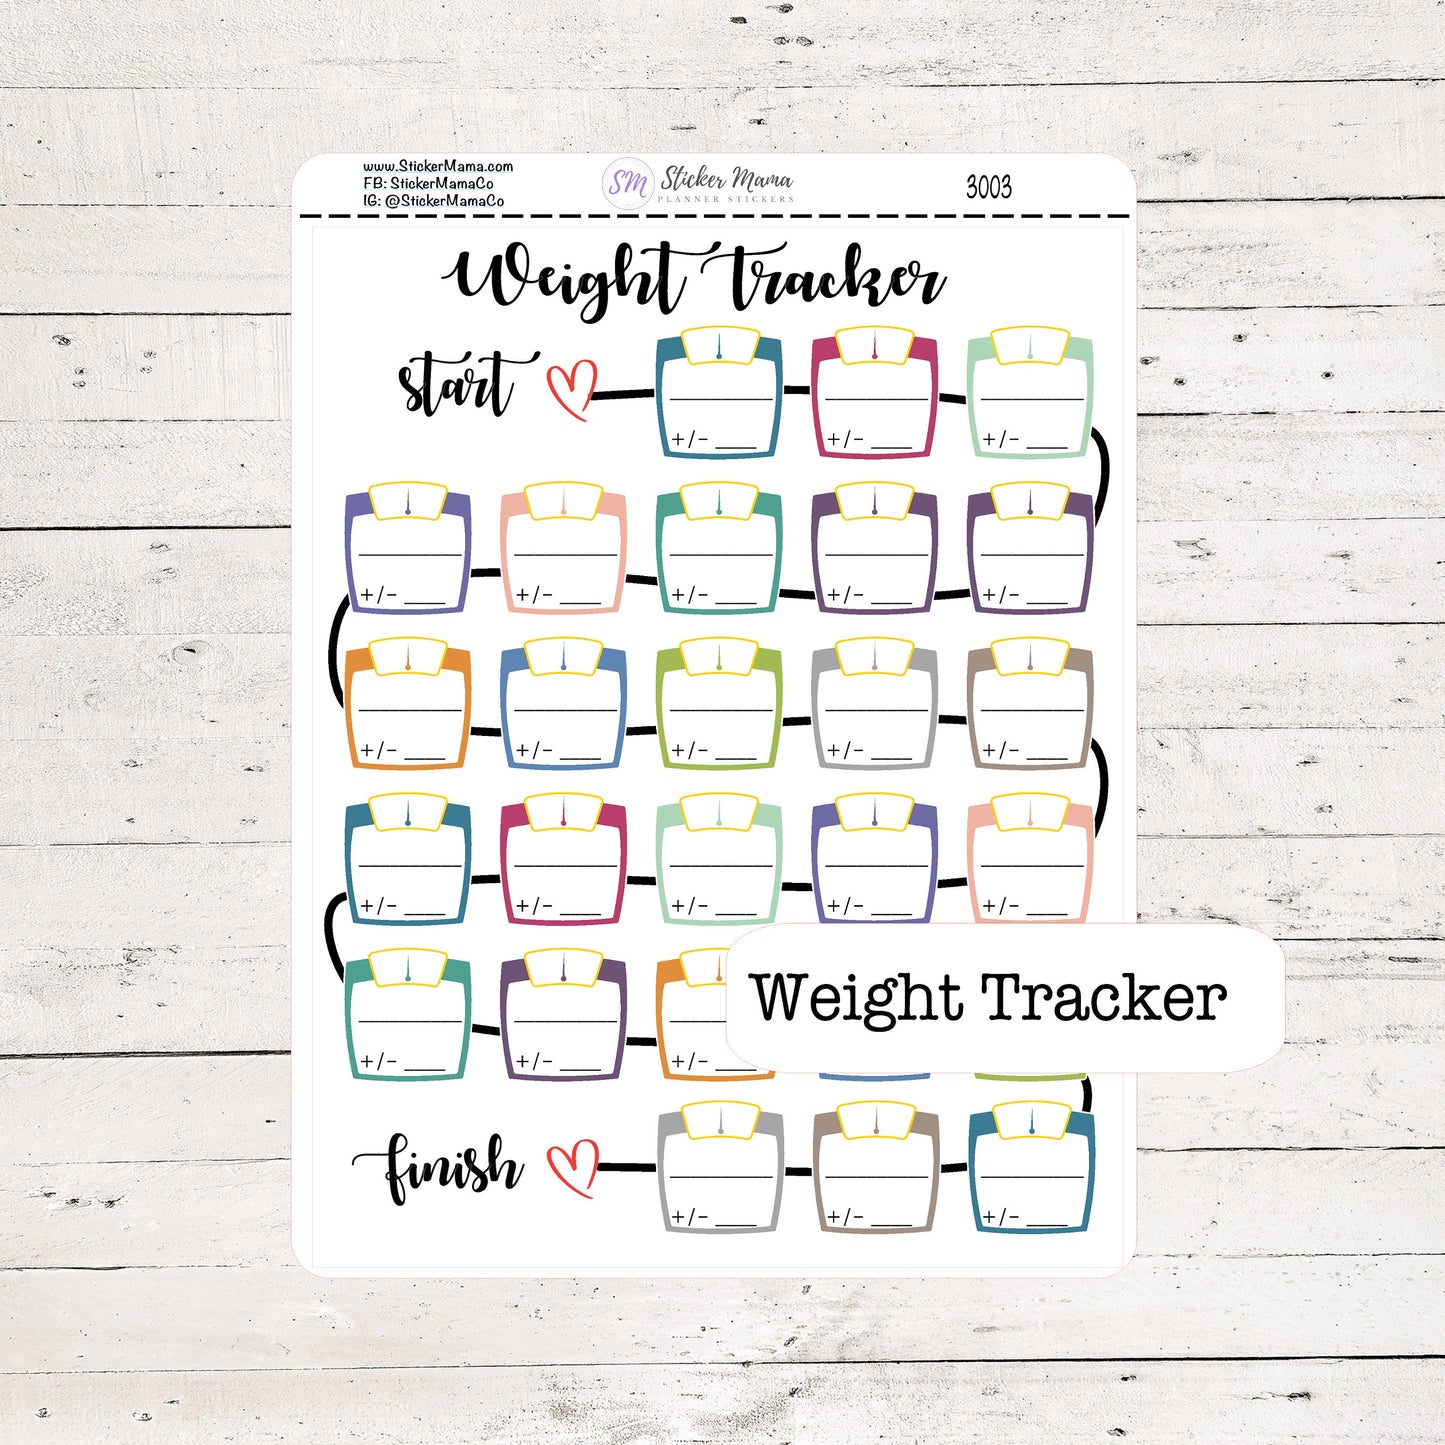 WEIGHT TRACKER NOTE 3003 - Planner Stickers weight tracker sticker track your weight weekly weigh in stickers